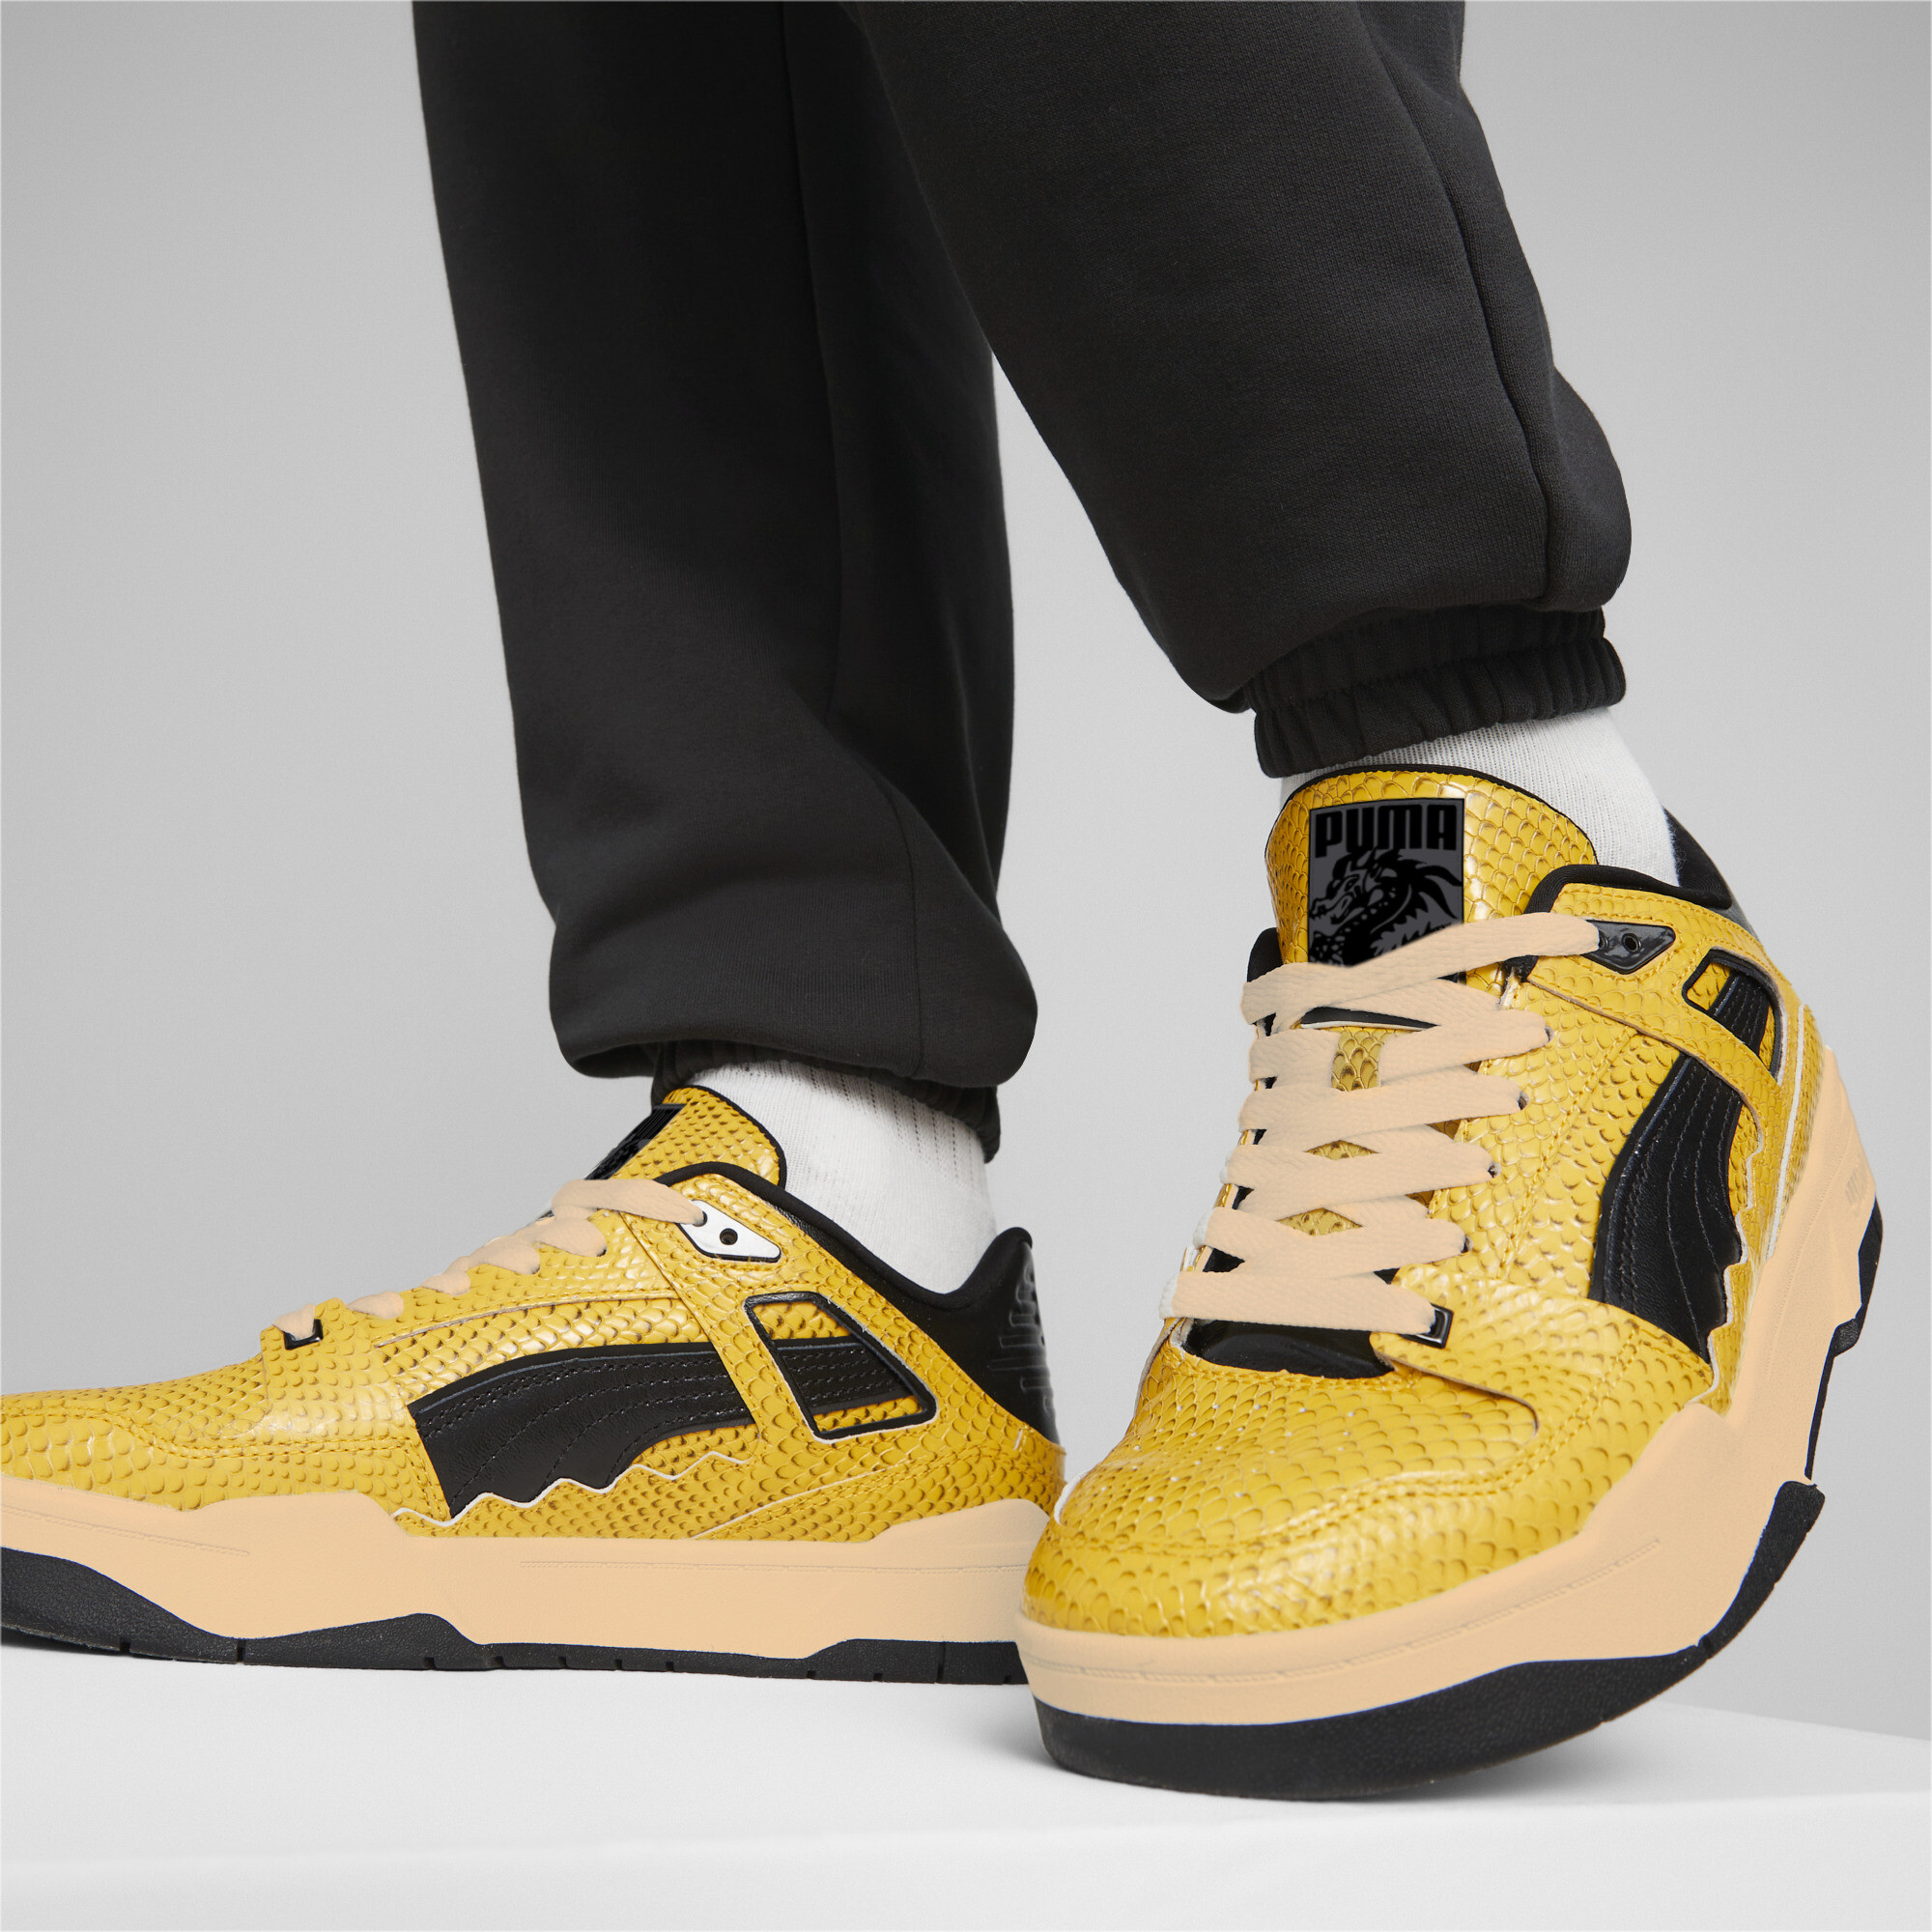 Men's PUMA X STAPLE Slipstream T Sneakers In Yellow, Size EU 41